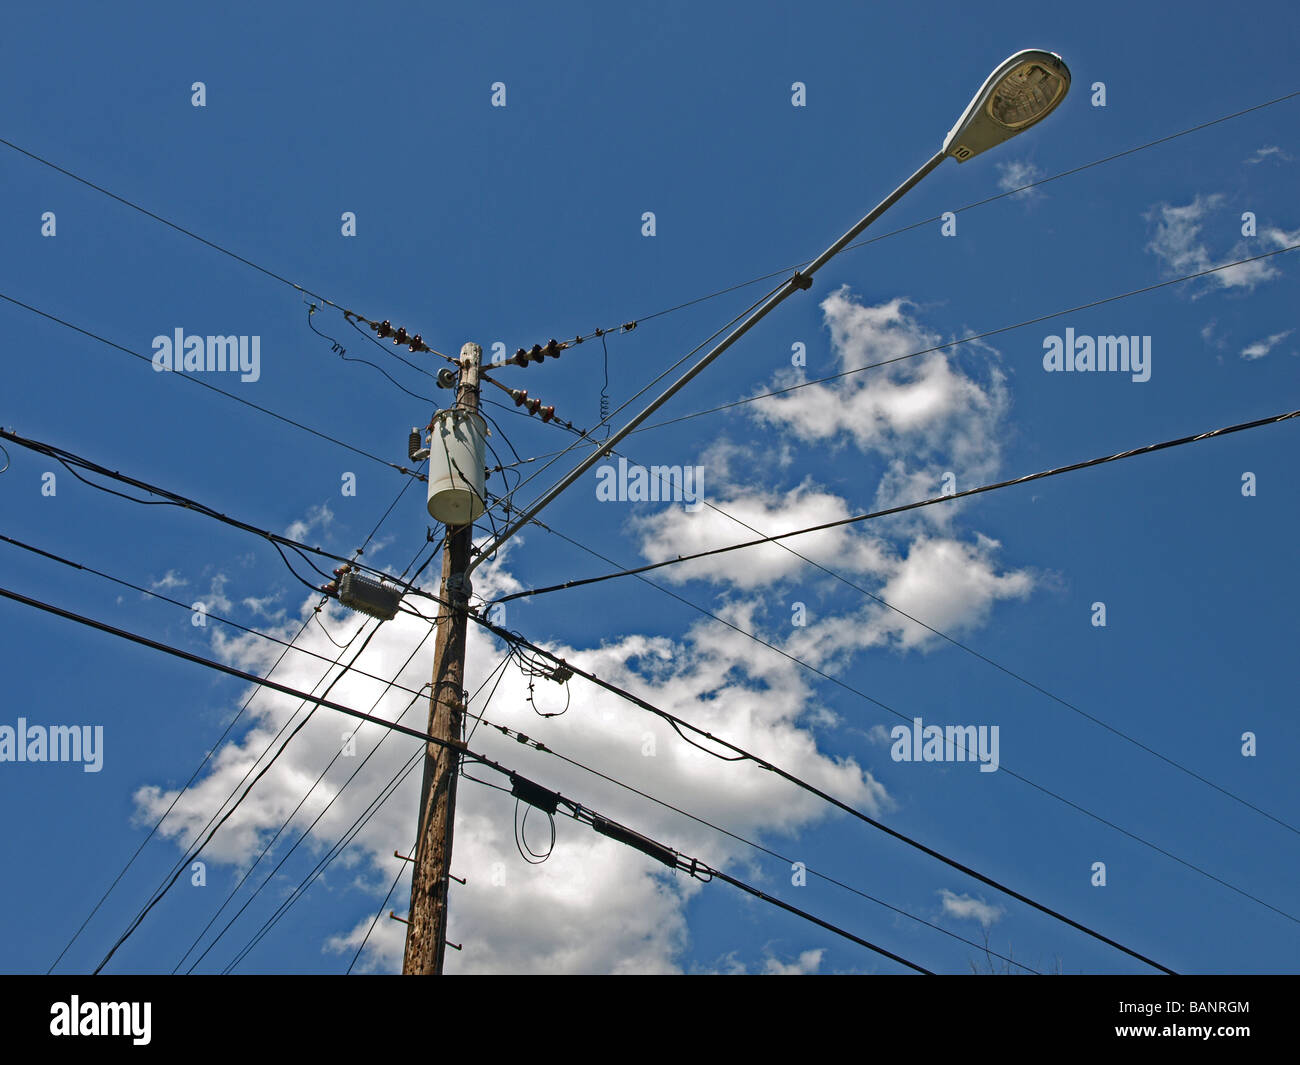 Postes de luz electrica fotografías e imágenes de alta resolución - Alamy